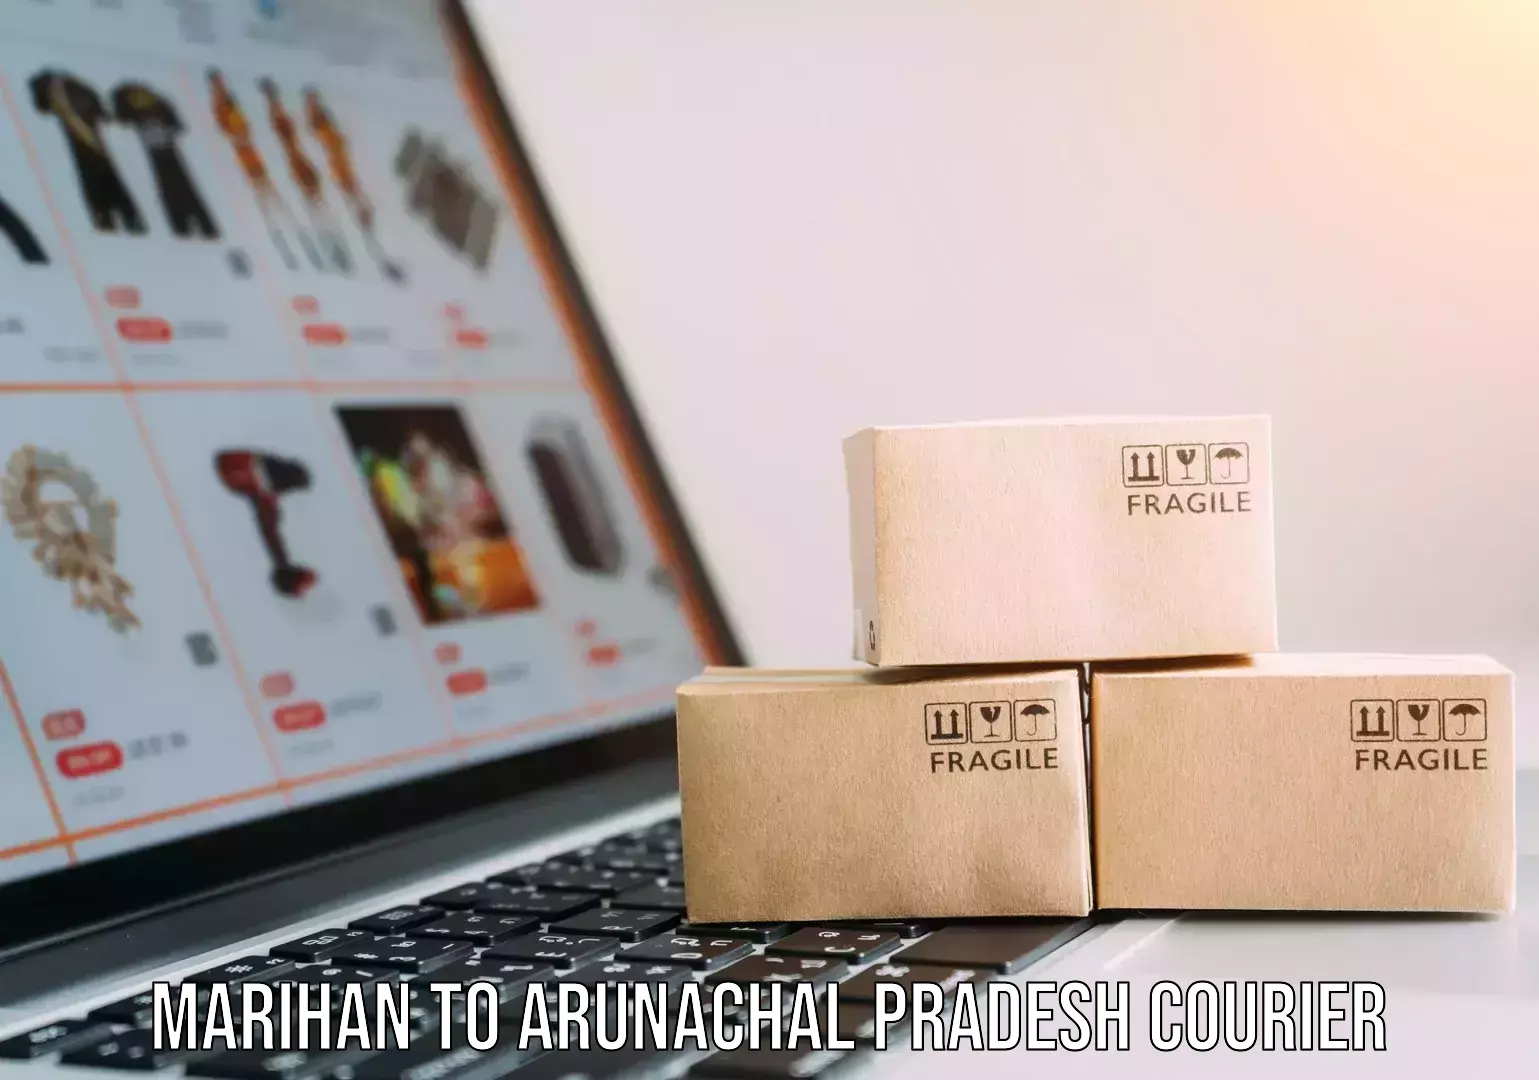 Quality moving and storage Marihan to Arunachal Pradesh